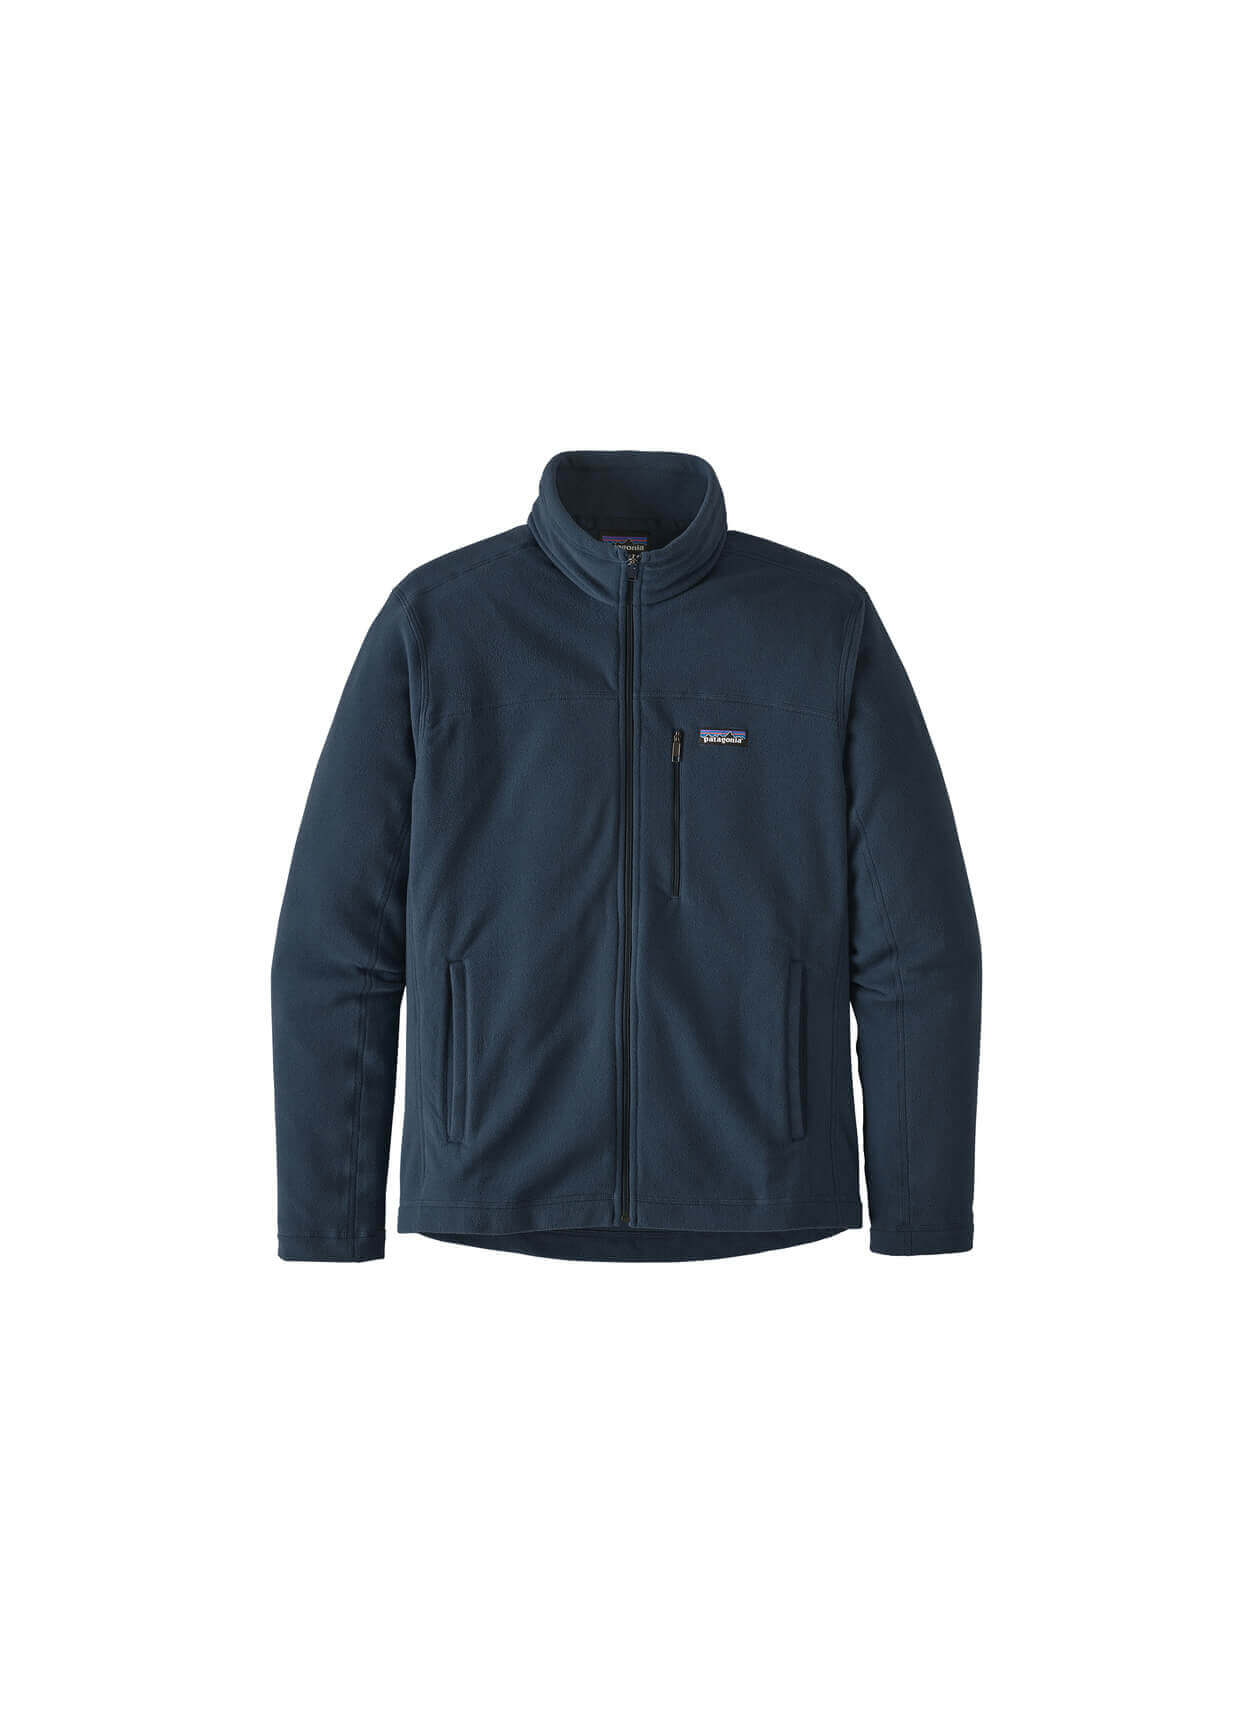 Patagonia 26171 - Men's Micro D Fleece Jacket